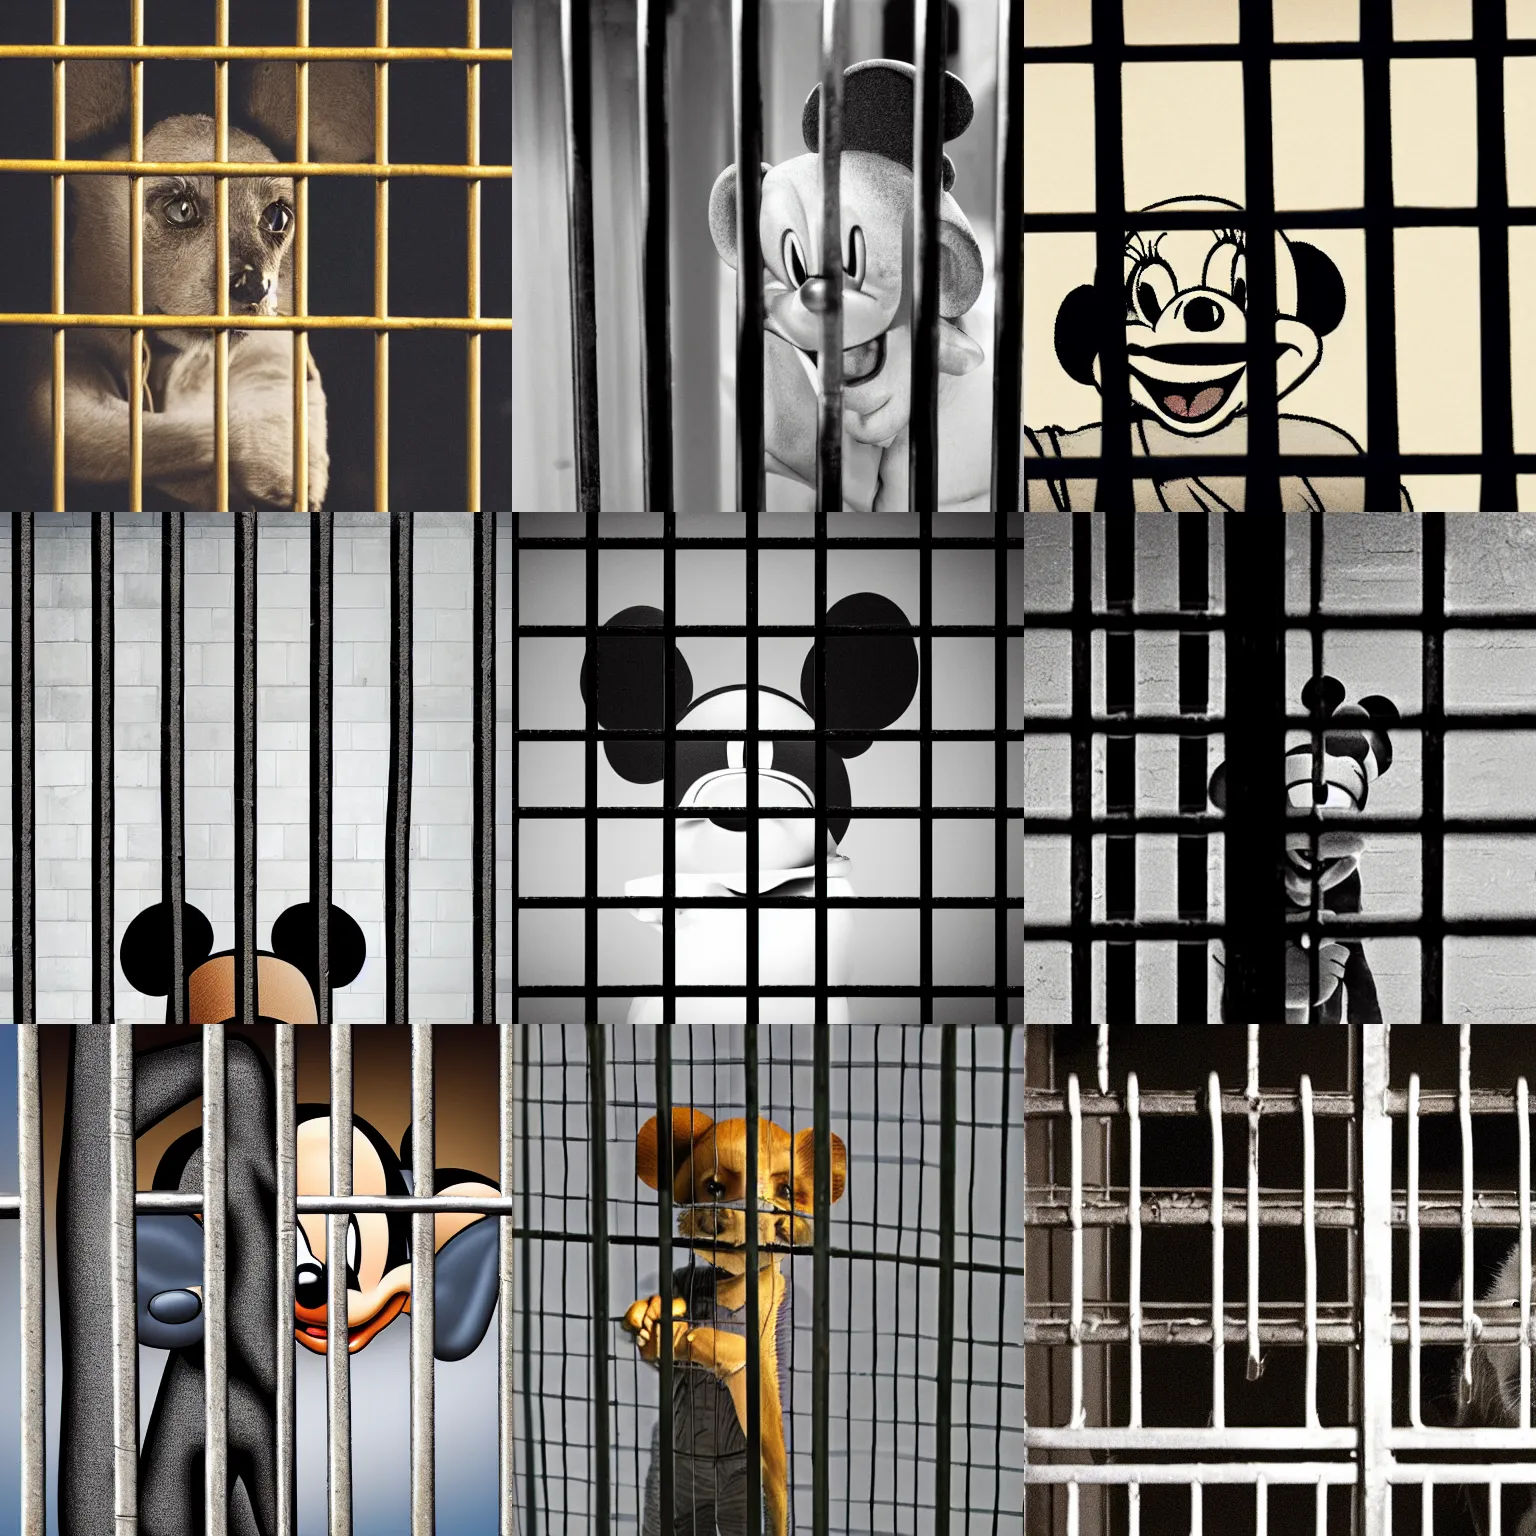 Prompt: Mickey behind jail bars